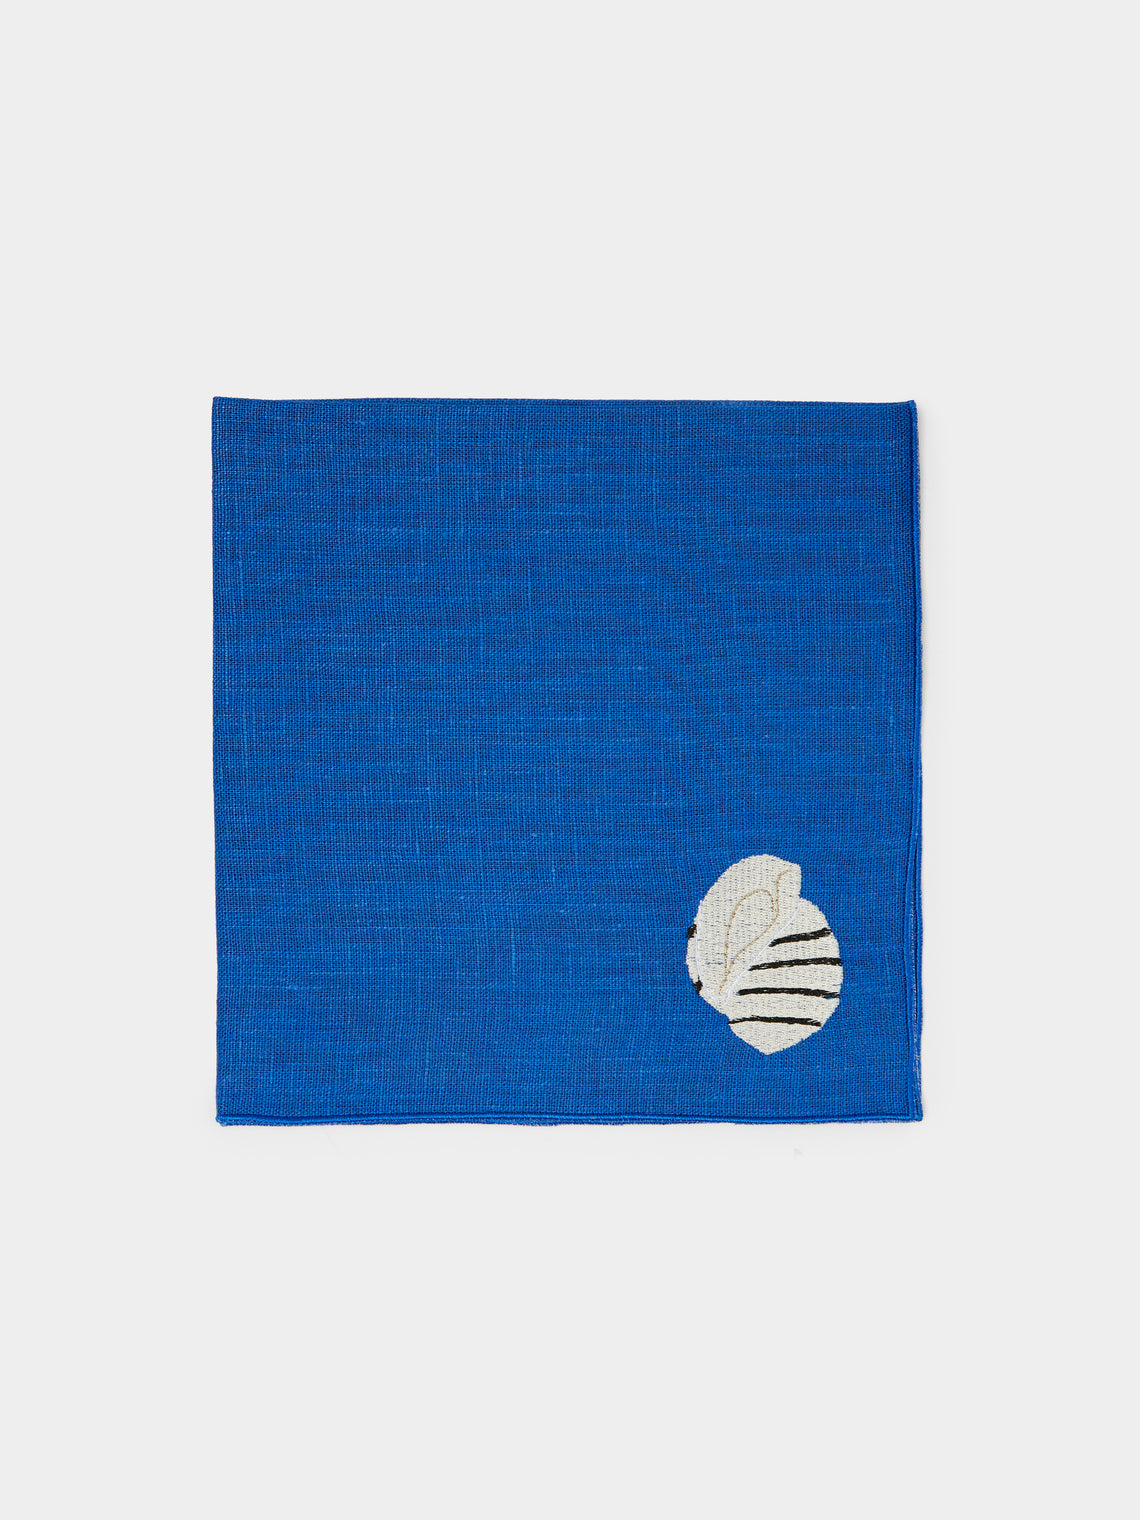 La Gallina Matta - Shells Embroidered Linen Napkins (Set of 4) -  - ABASK